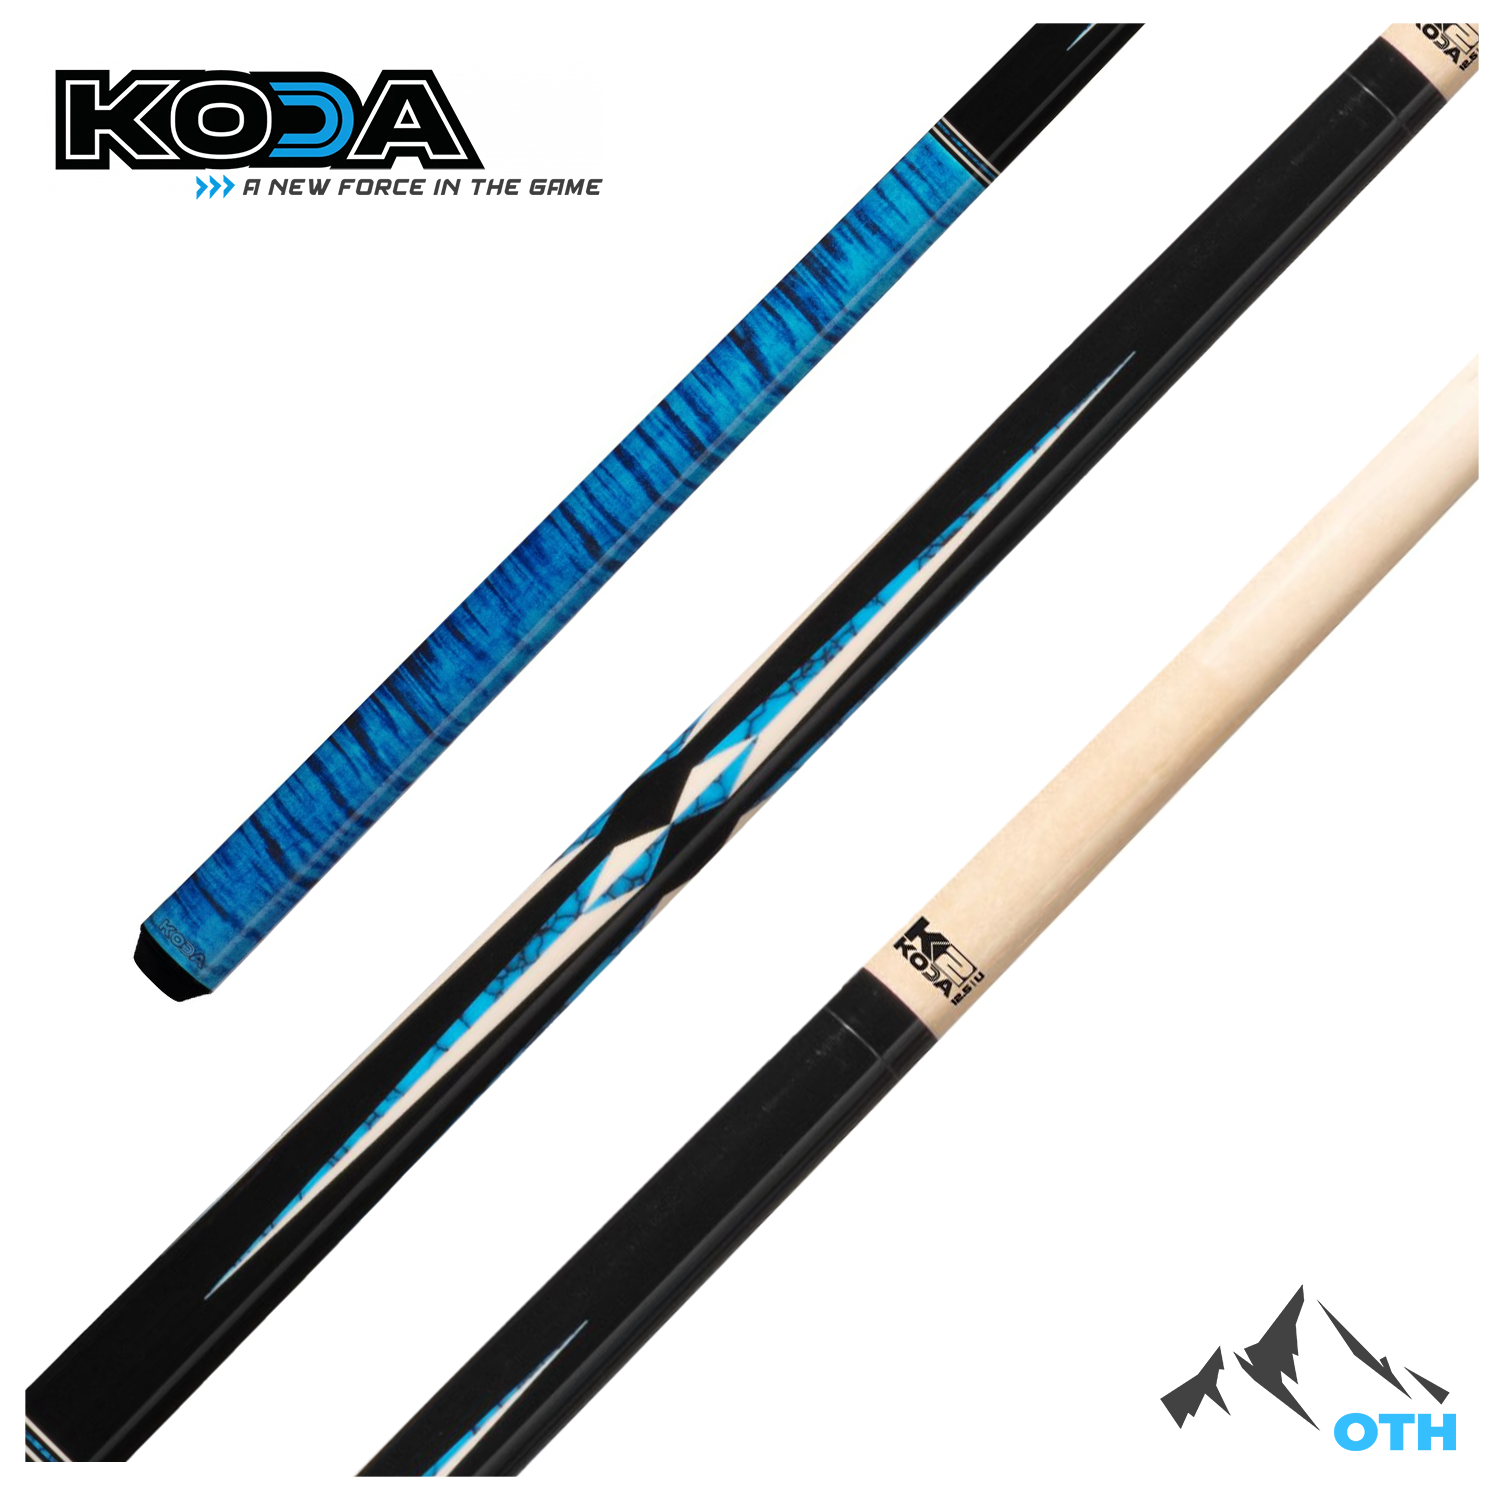 Koda K2 Series KL141